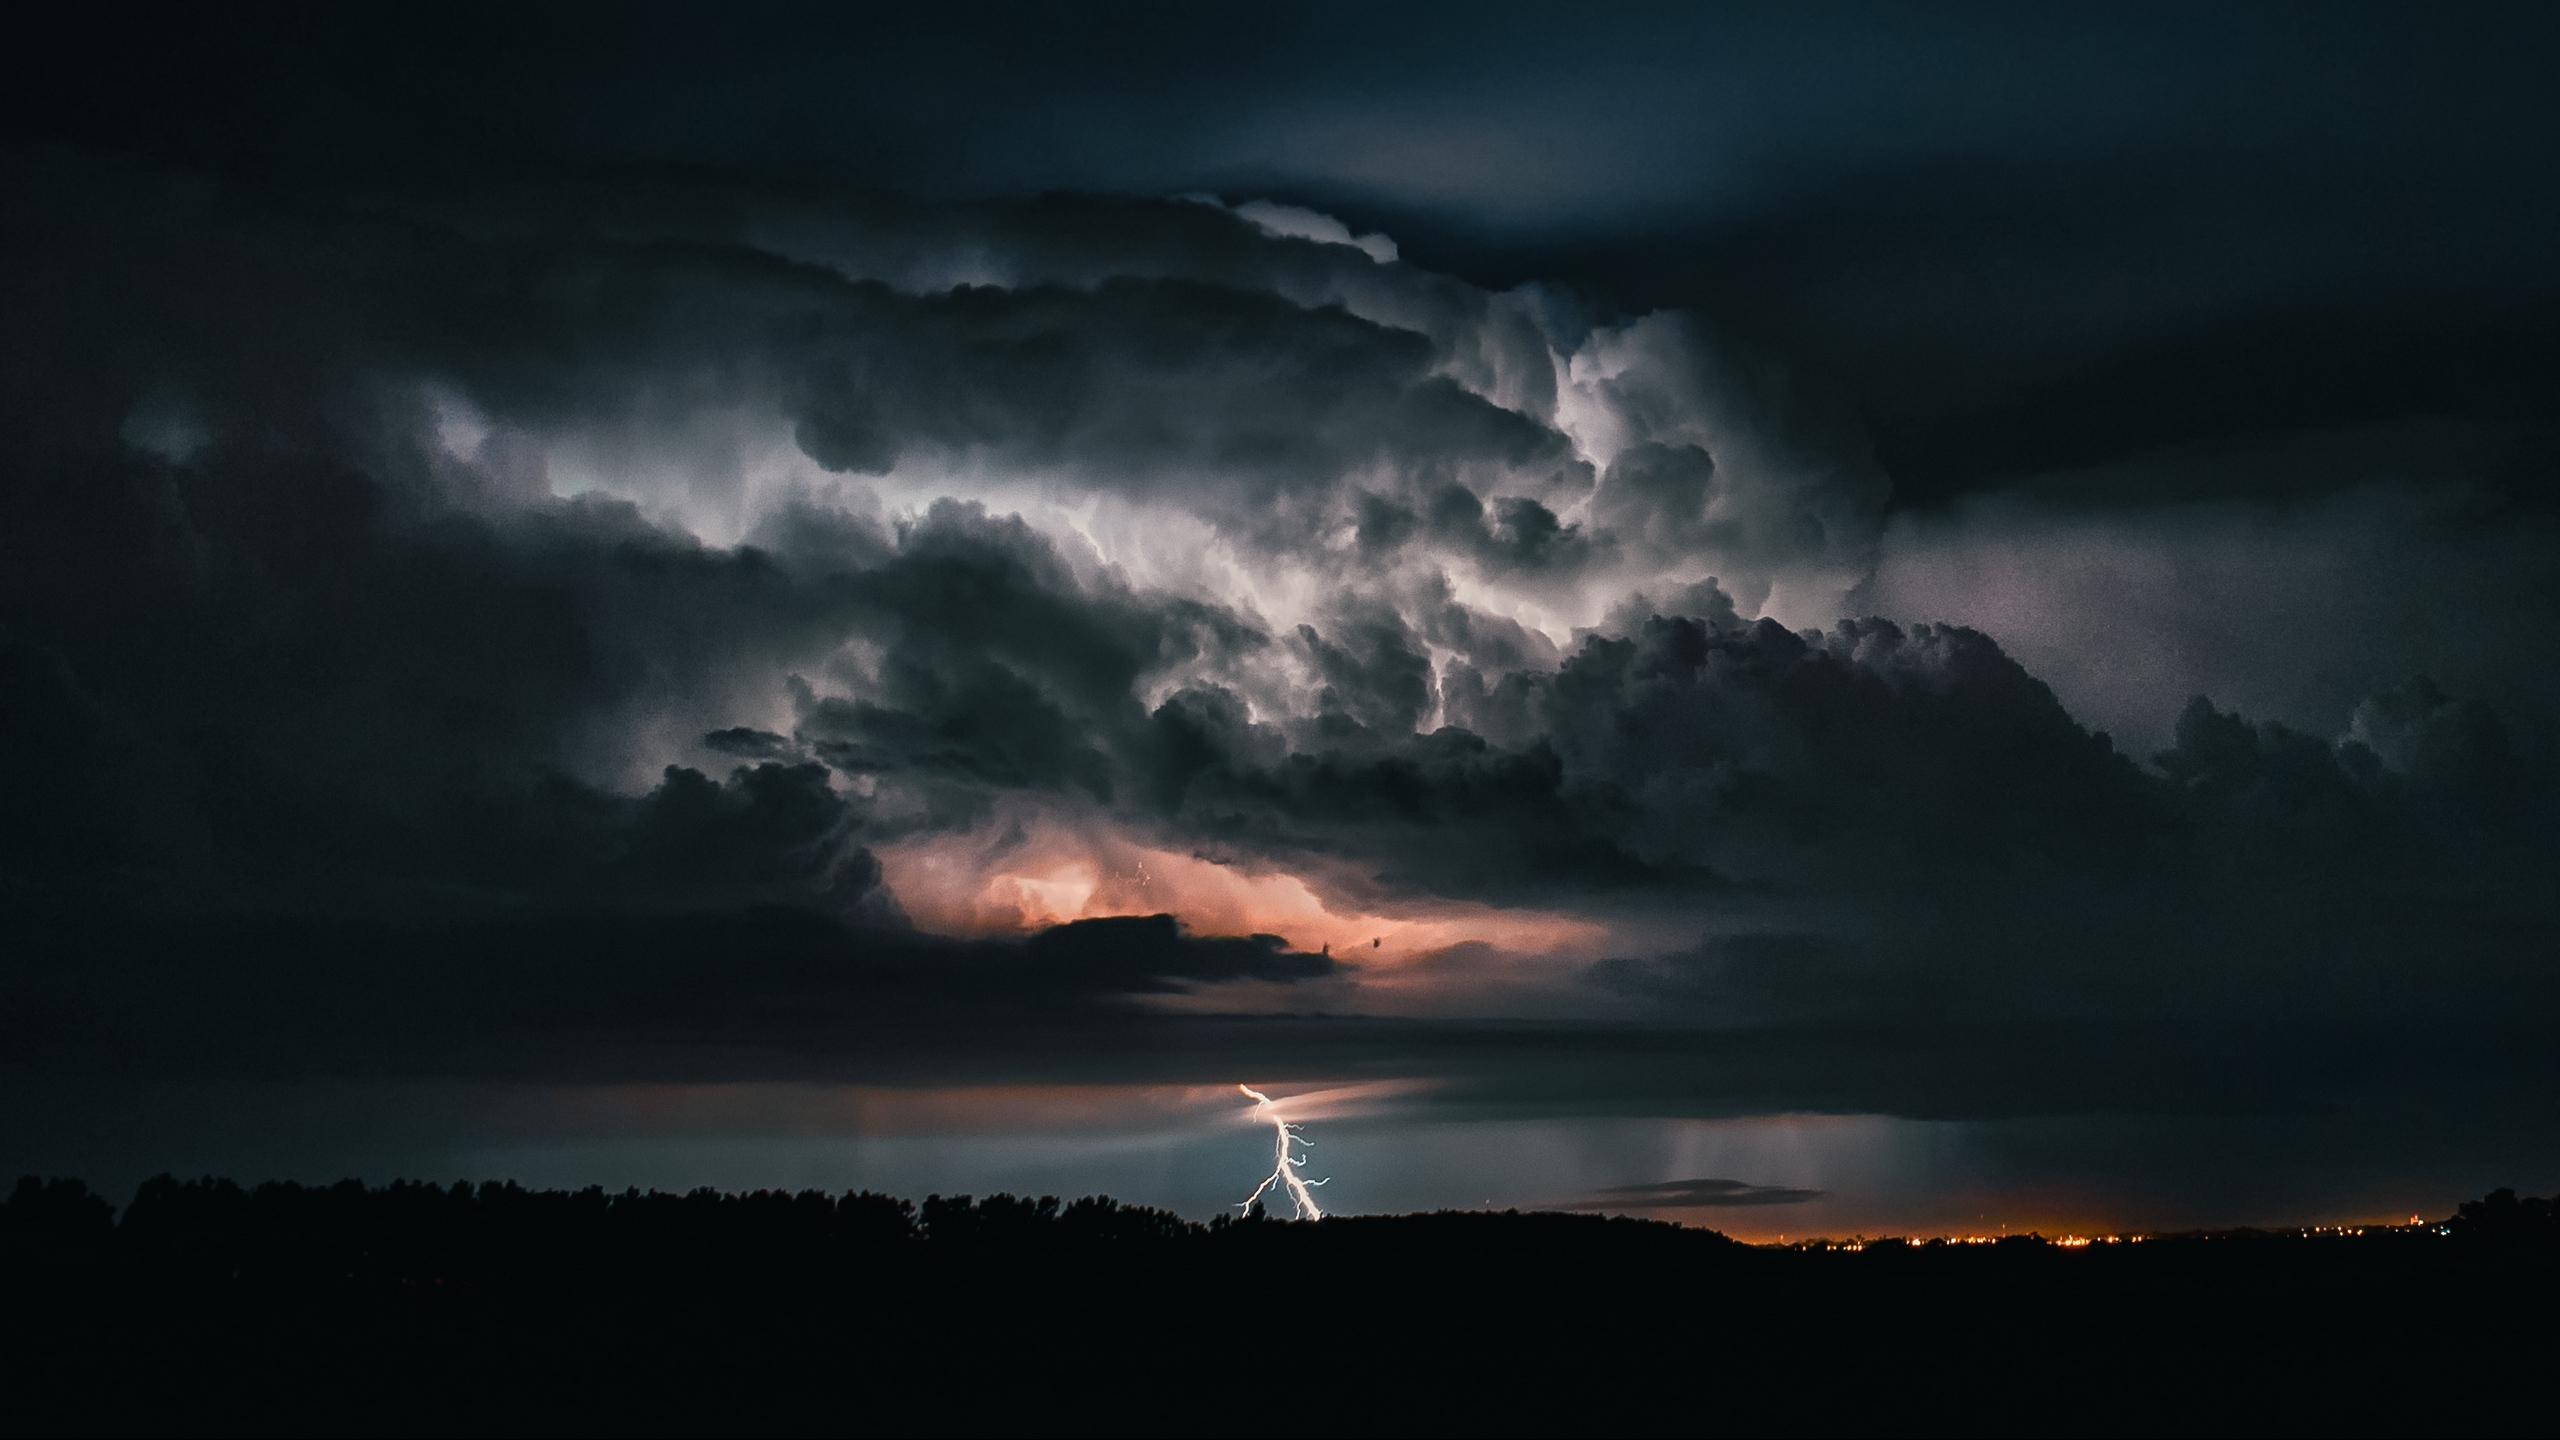 Download wallpaper 2560x1440 lightning, thunderstorm, cloudy